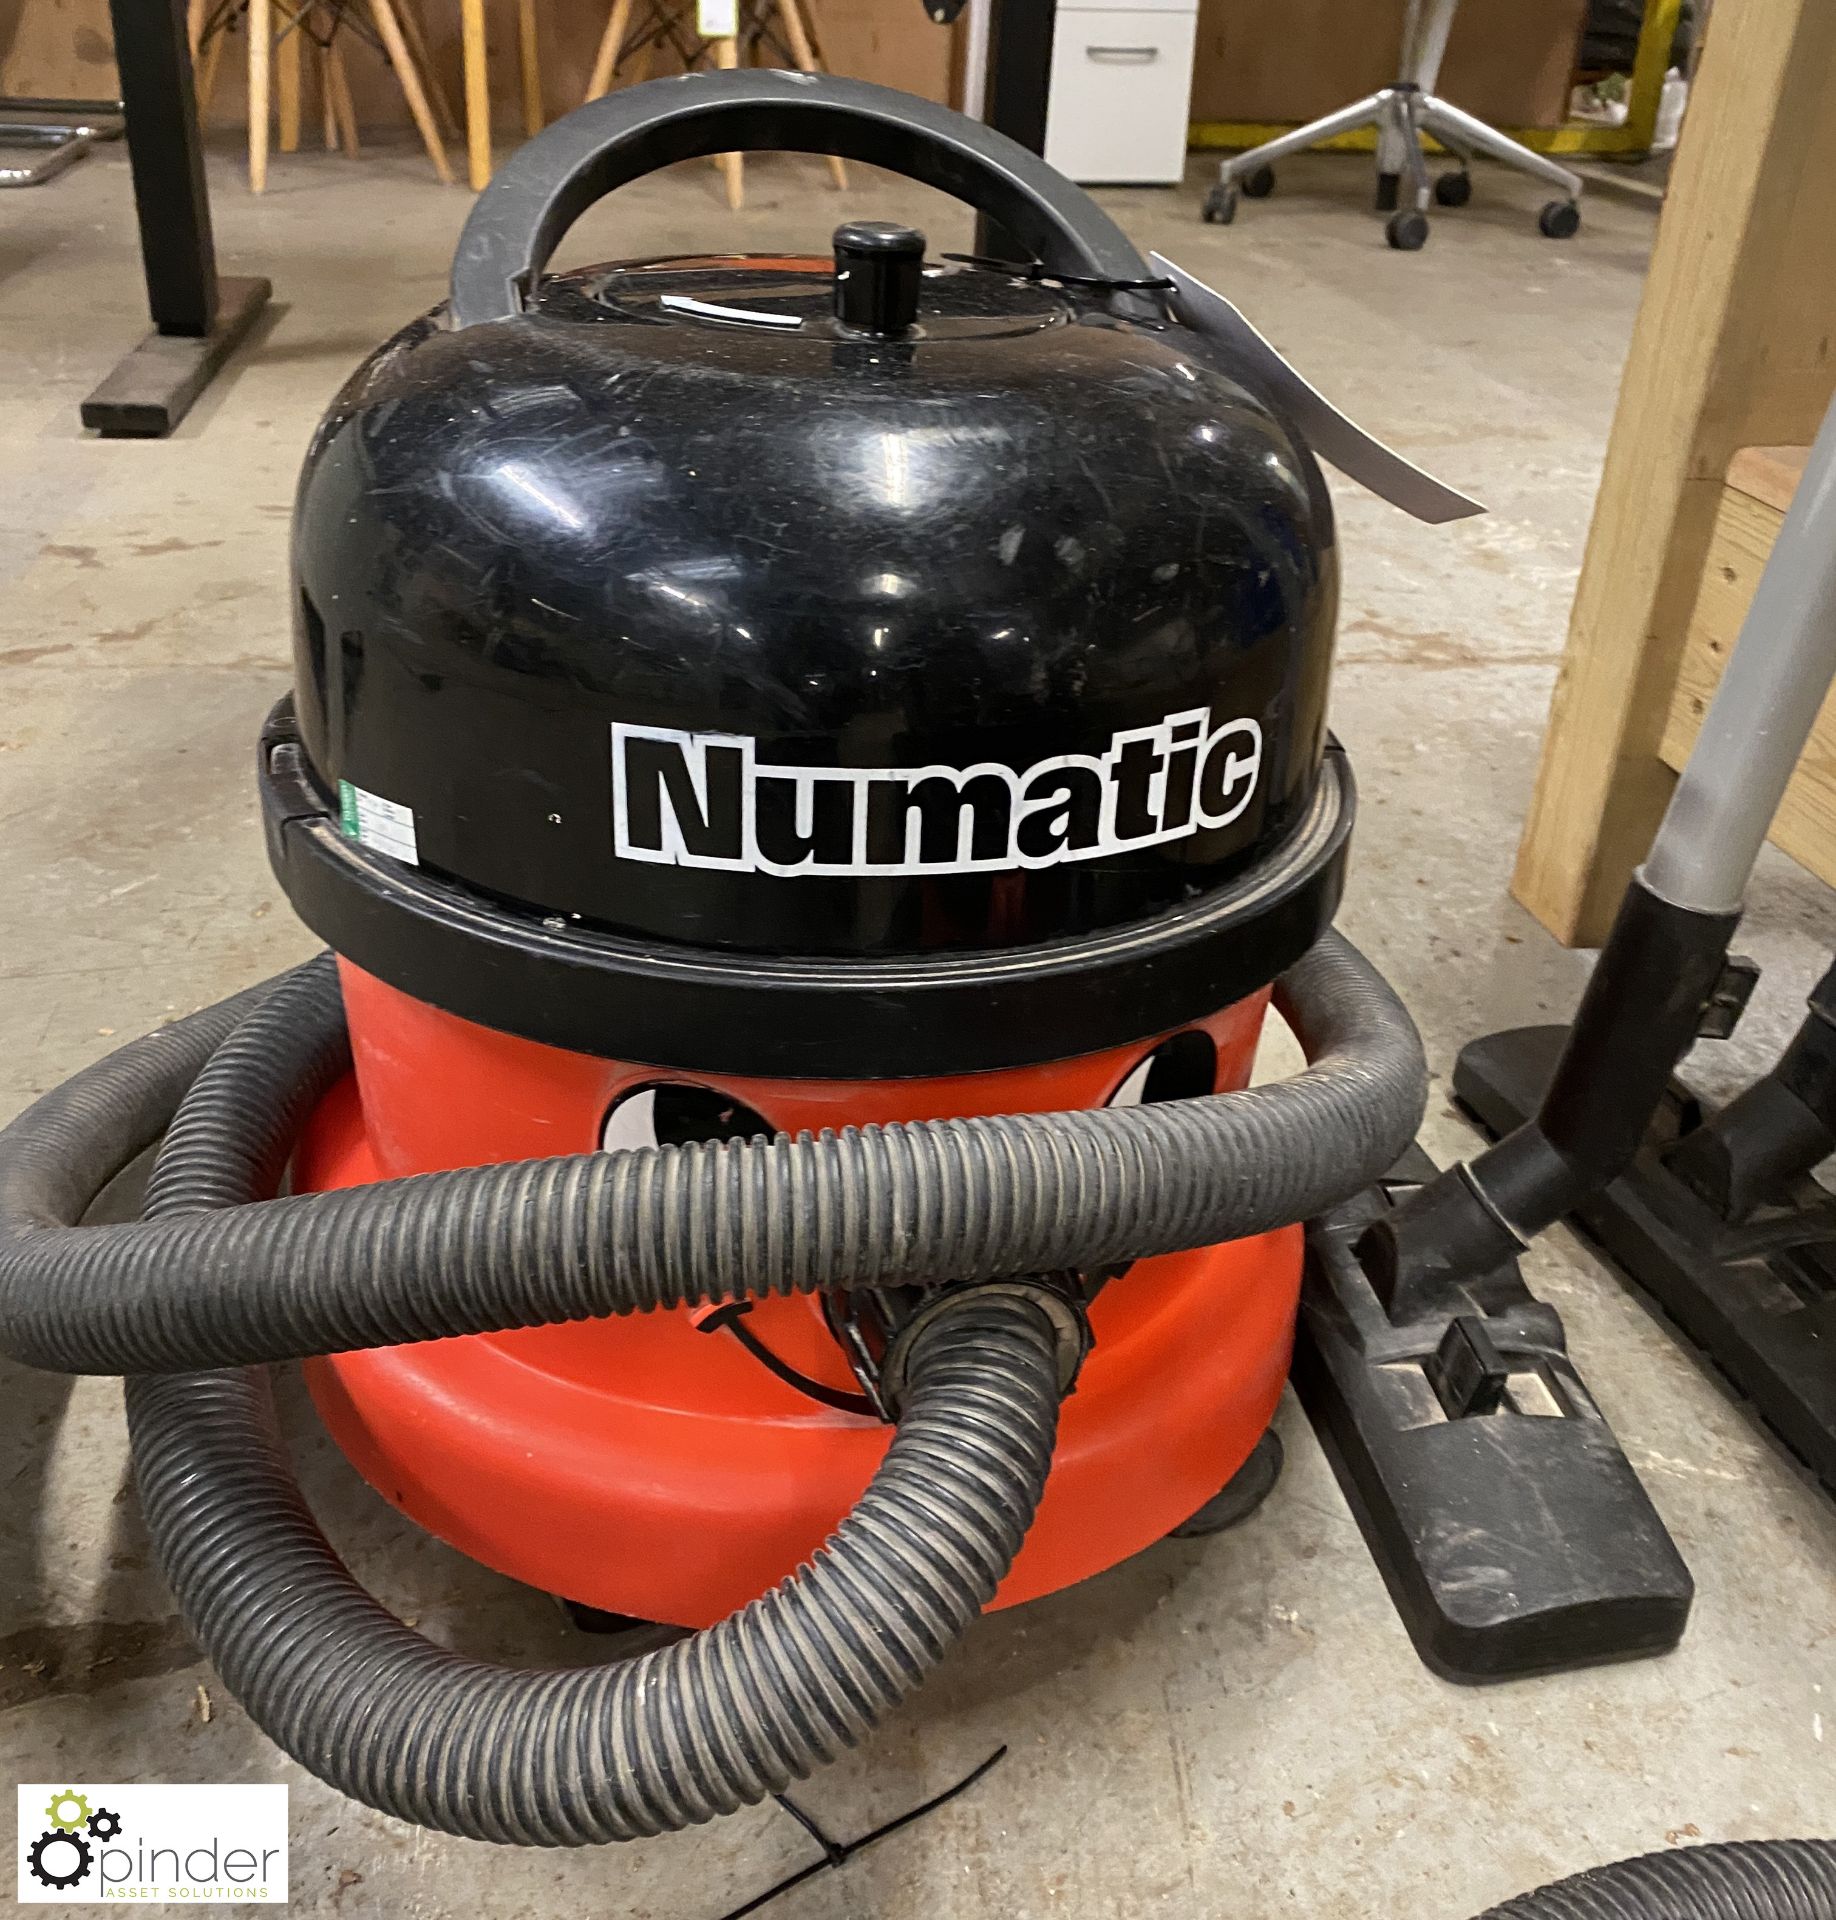 Numatic Vacuum Cleaner, 240volts